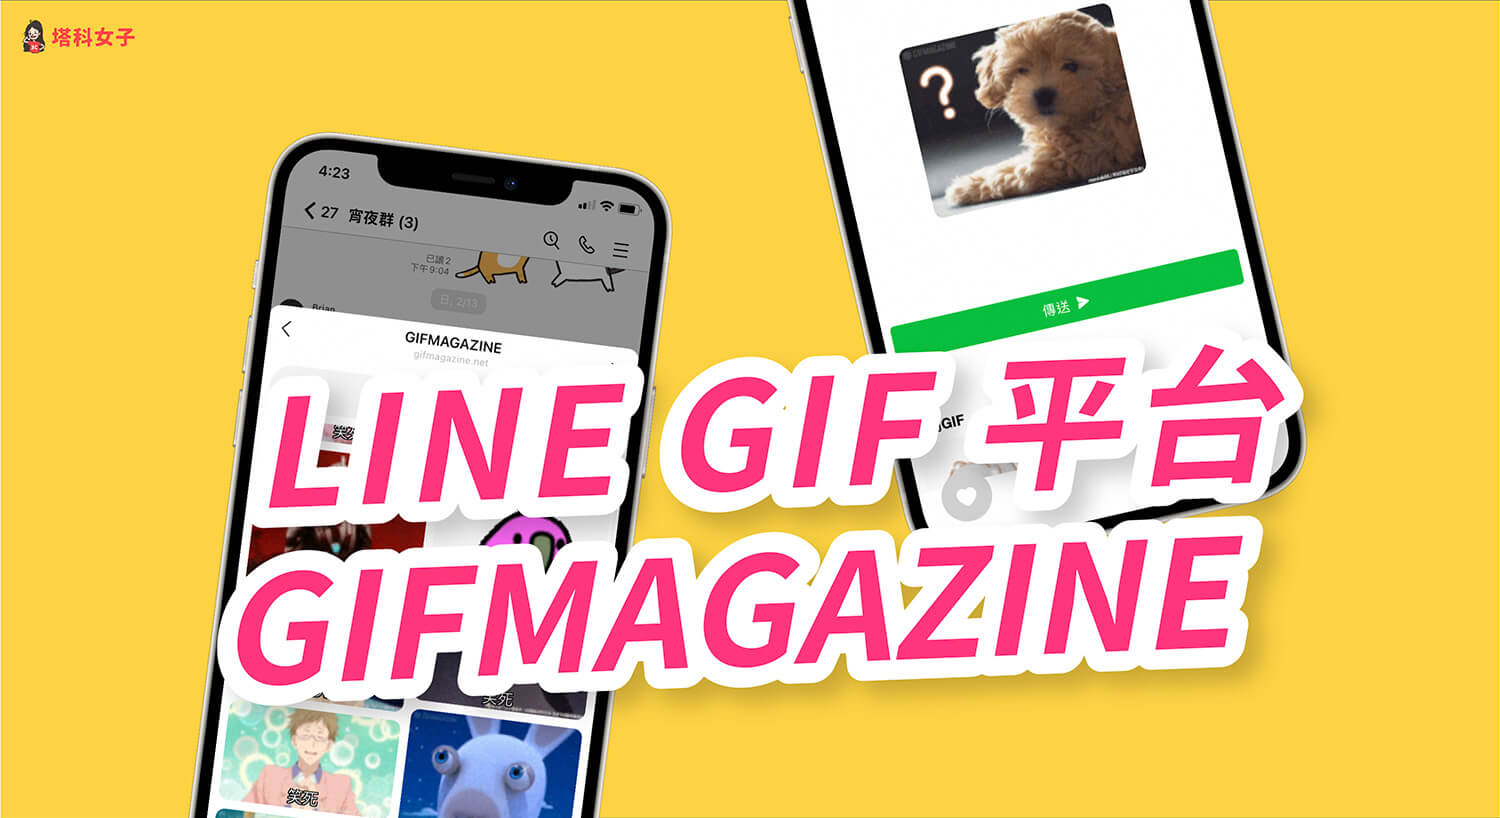 LINE GIF 怎麼用？內建 GIF 平台 GIFMAGAZINE 可快速搜尋並傳送動圖